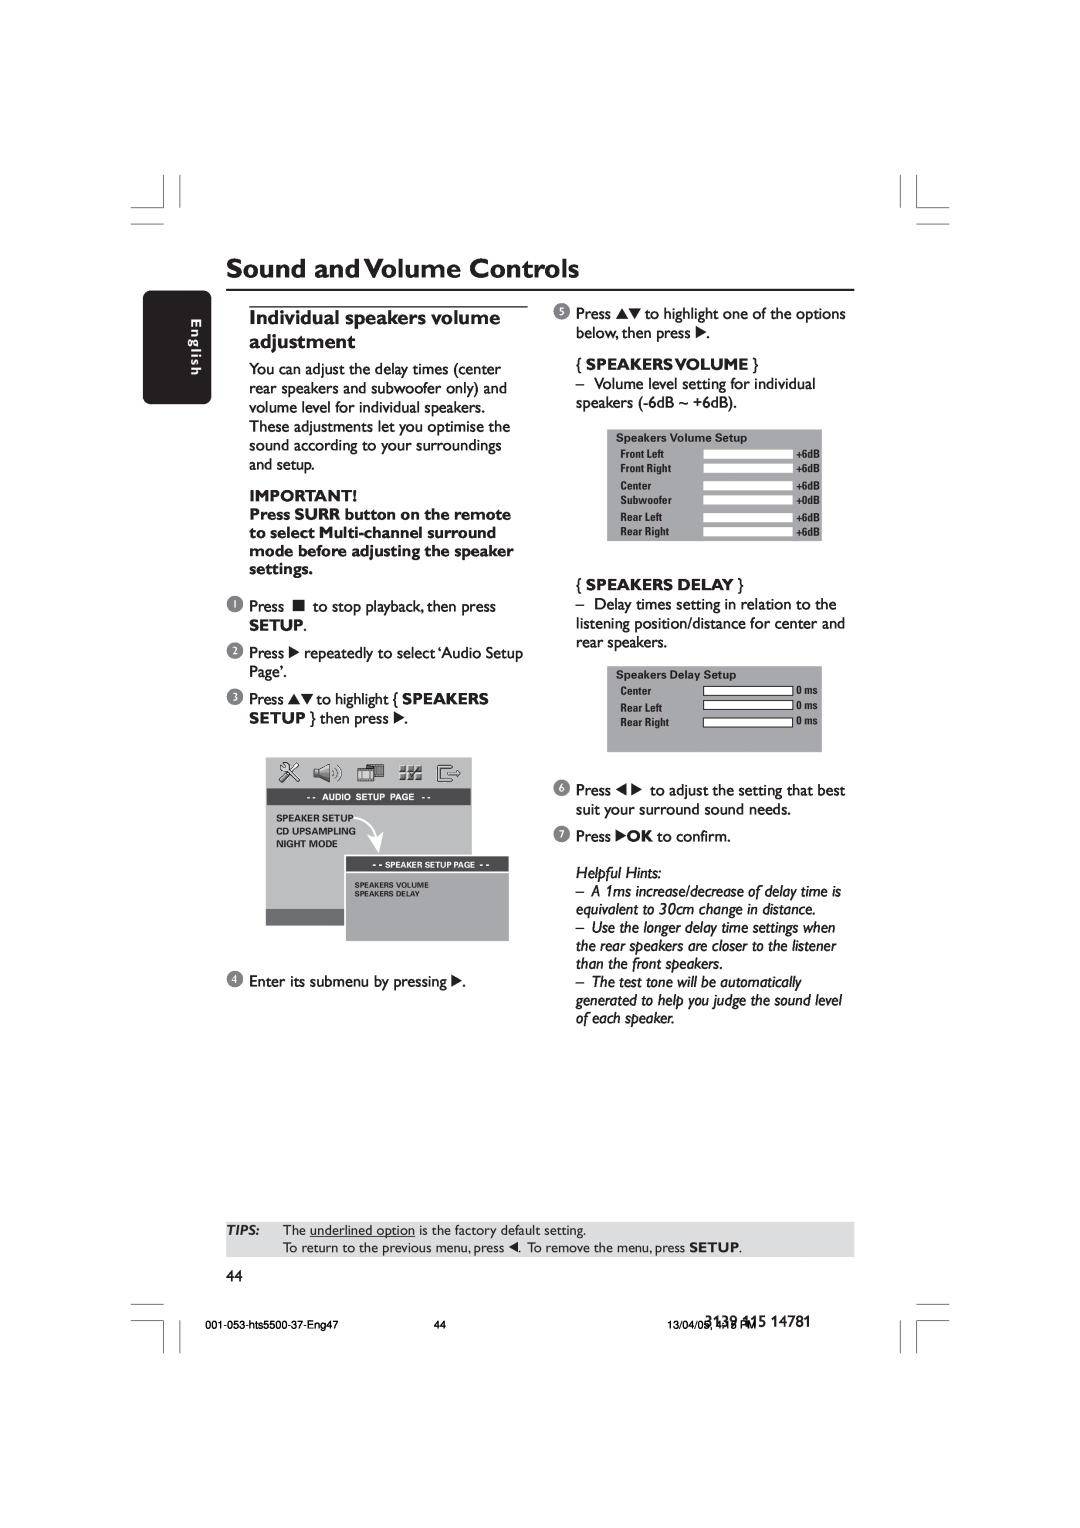 Philips HTS5500C Sound and Volume Controls, Individual speakers volume adjustment, Setup, Speakers Volume, Speakers Delay 